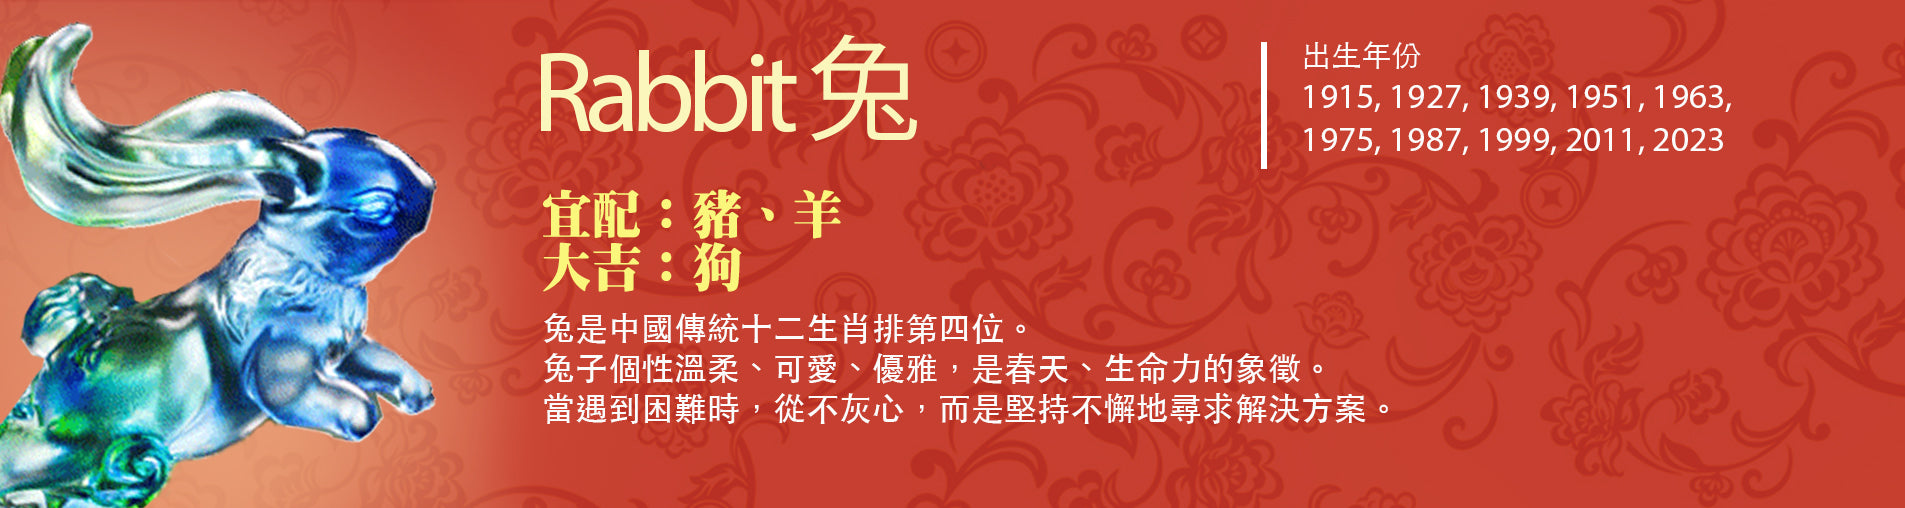 Year of the Rabbit | Chinese Zodiac Artwork